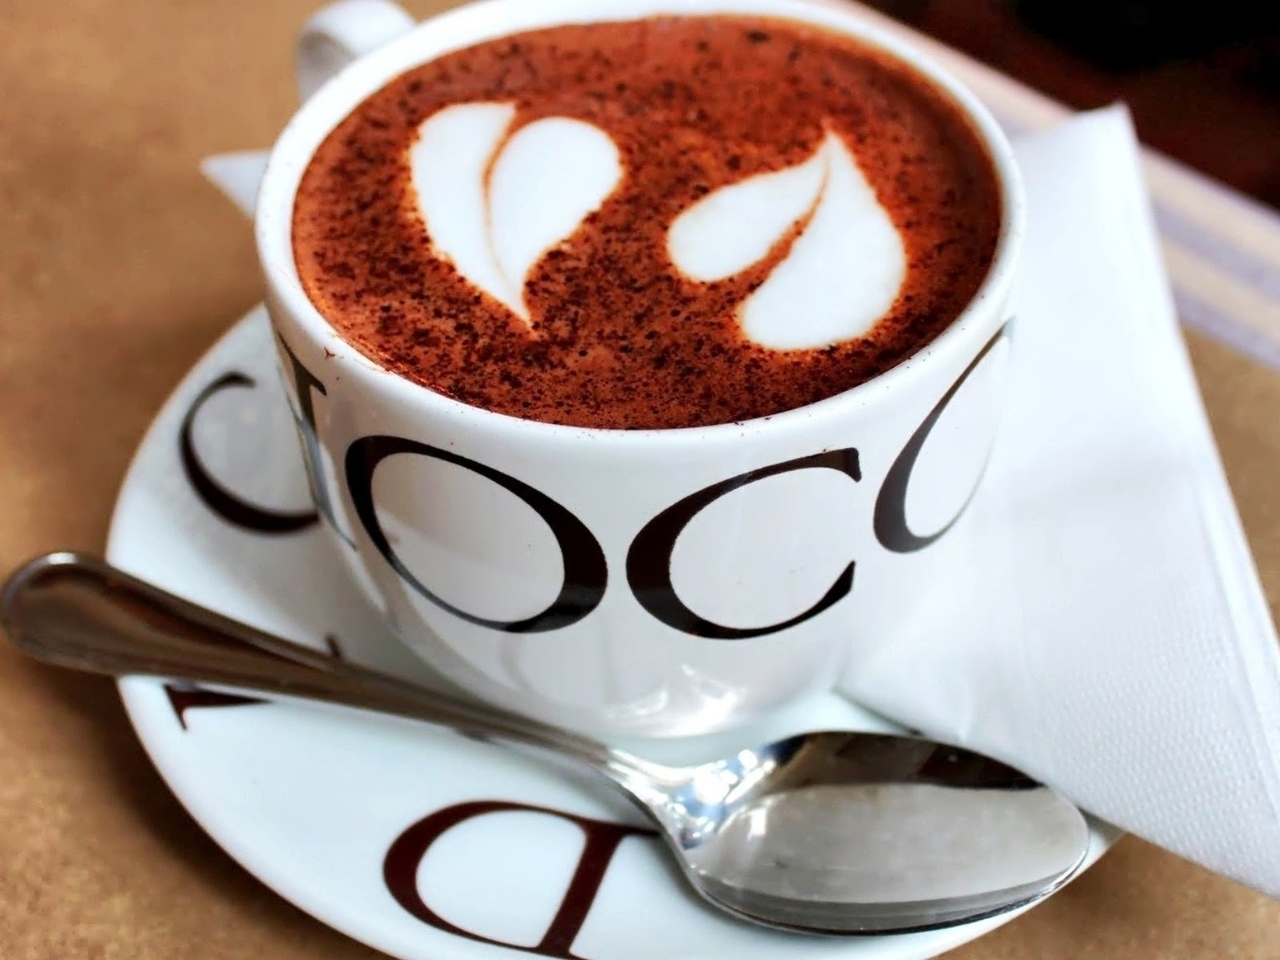 Image: Cappuccino, espresso, foam, hearts, illustration, mug, saucer, spoon